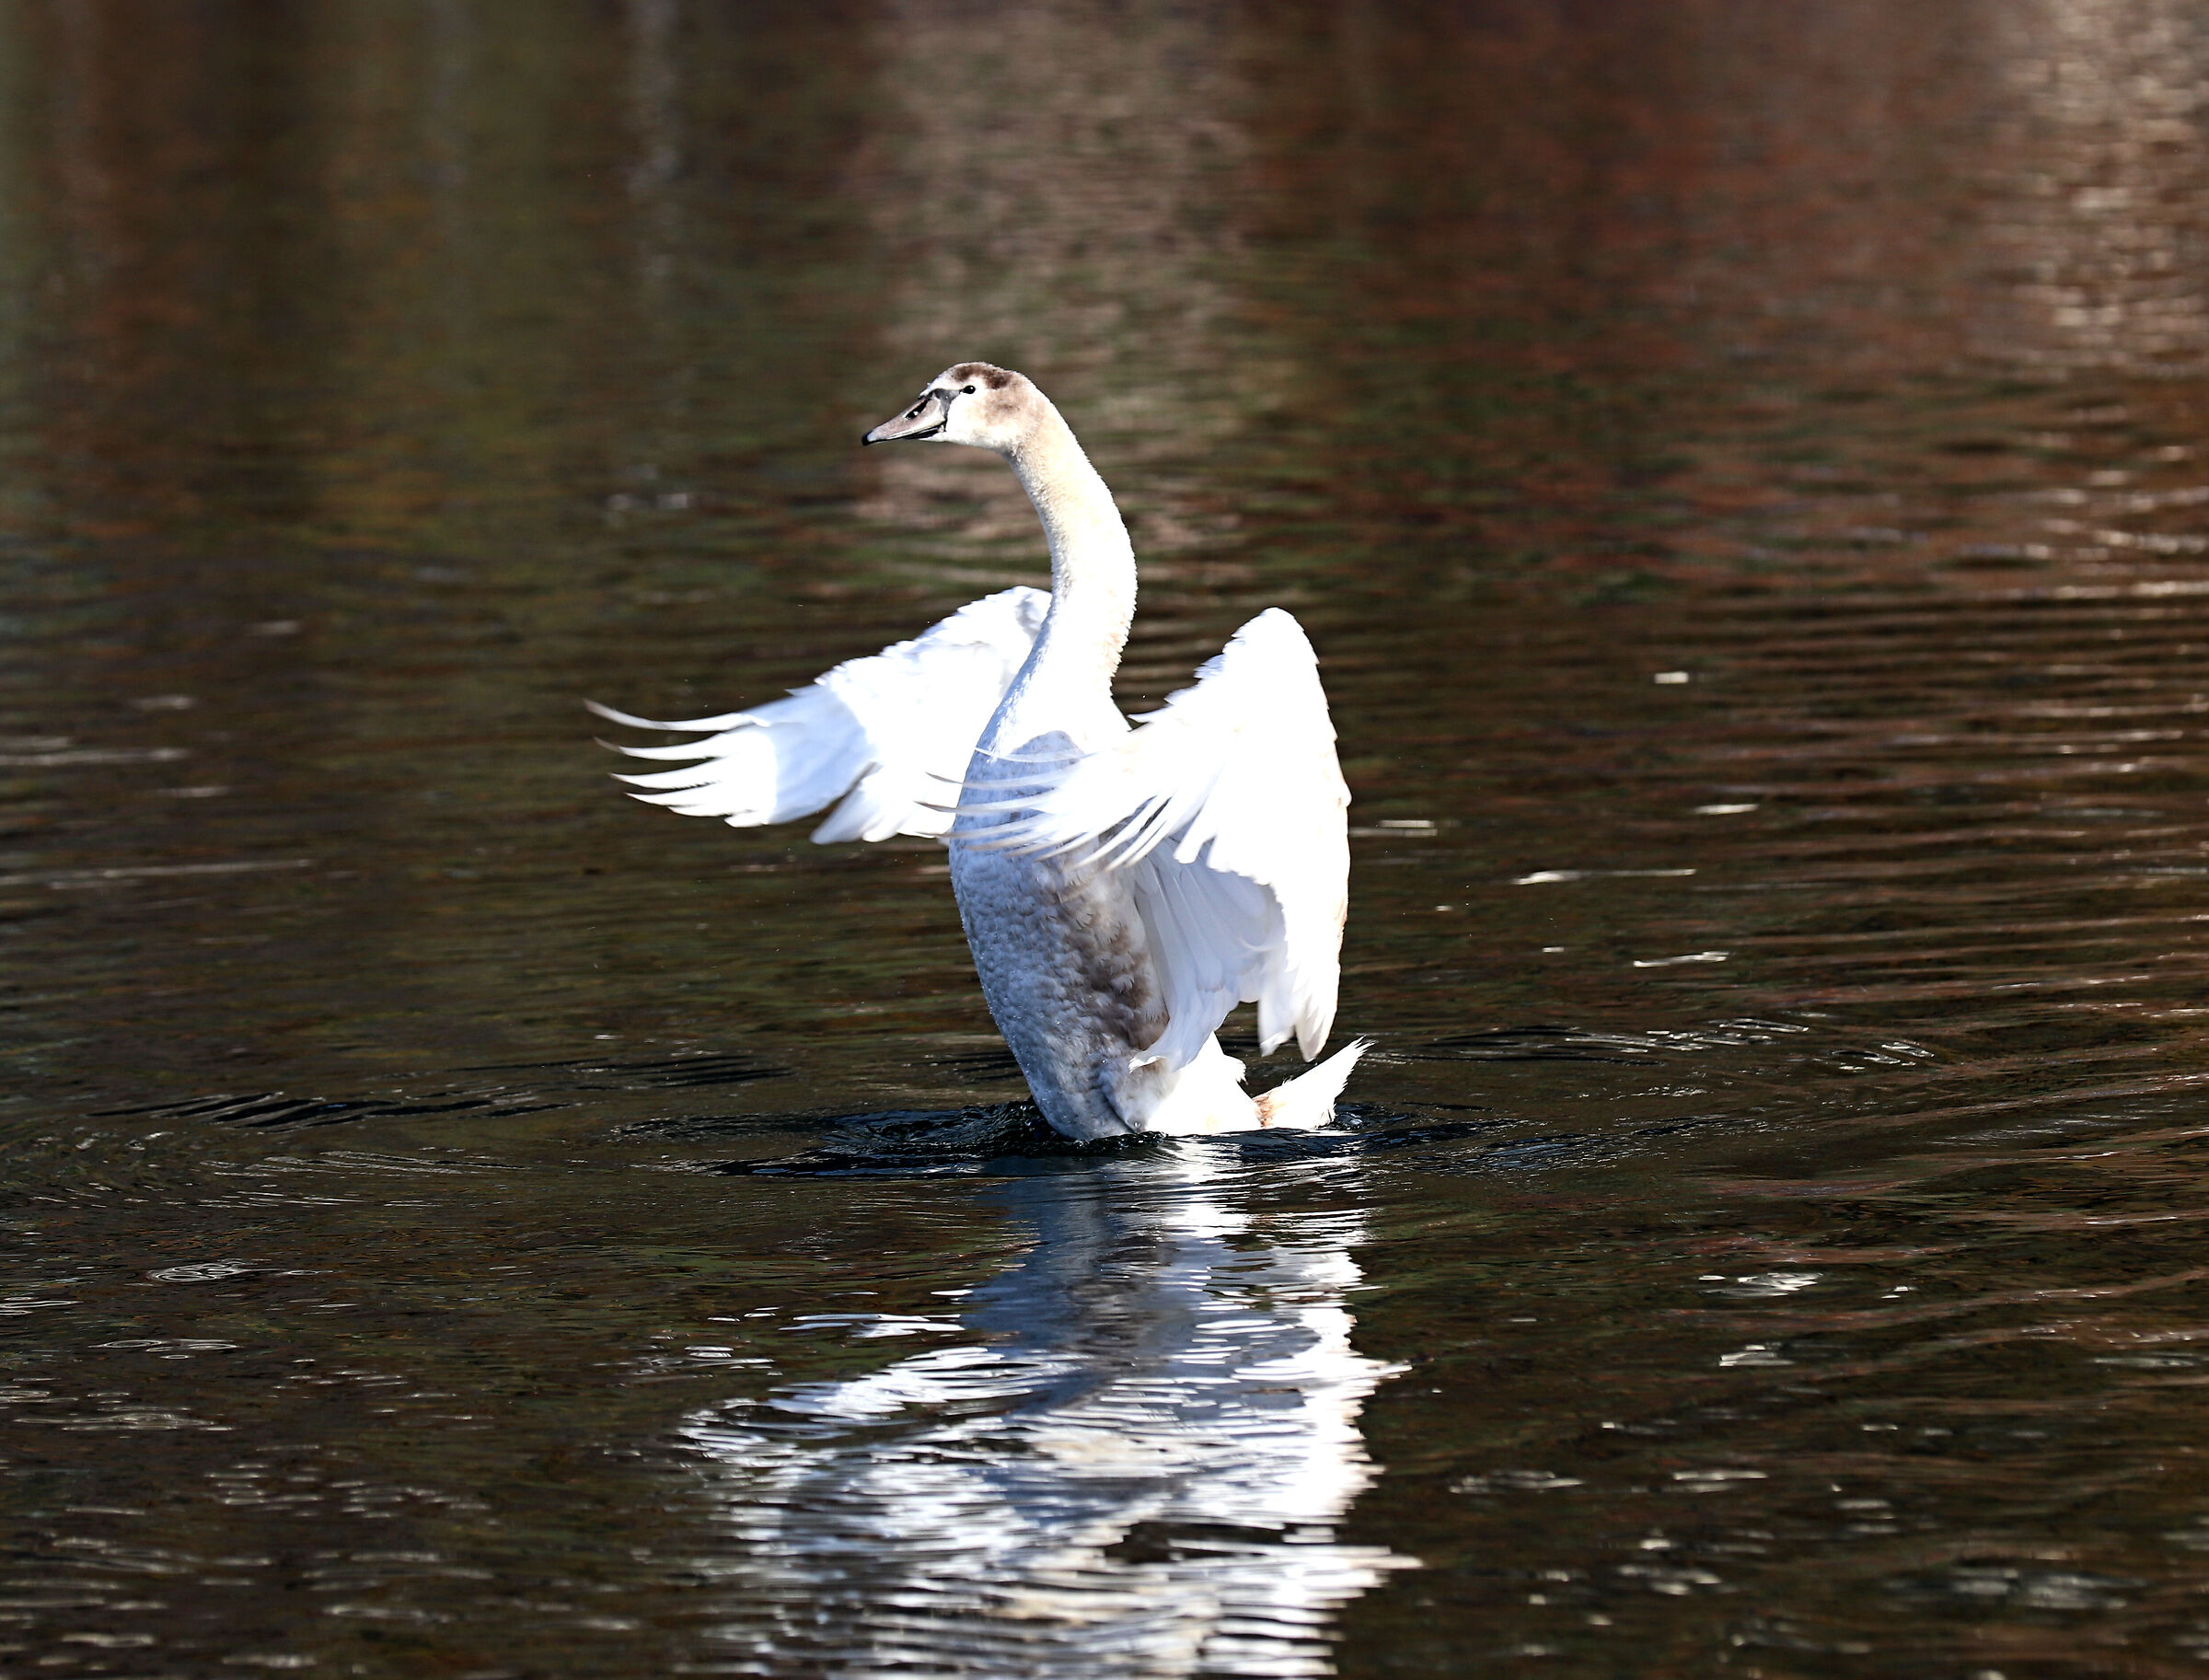 the swan dance...